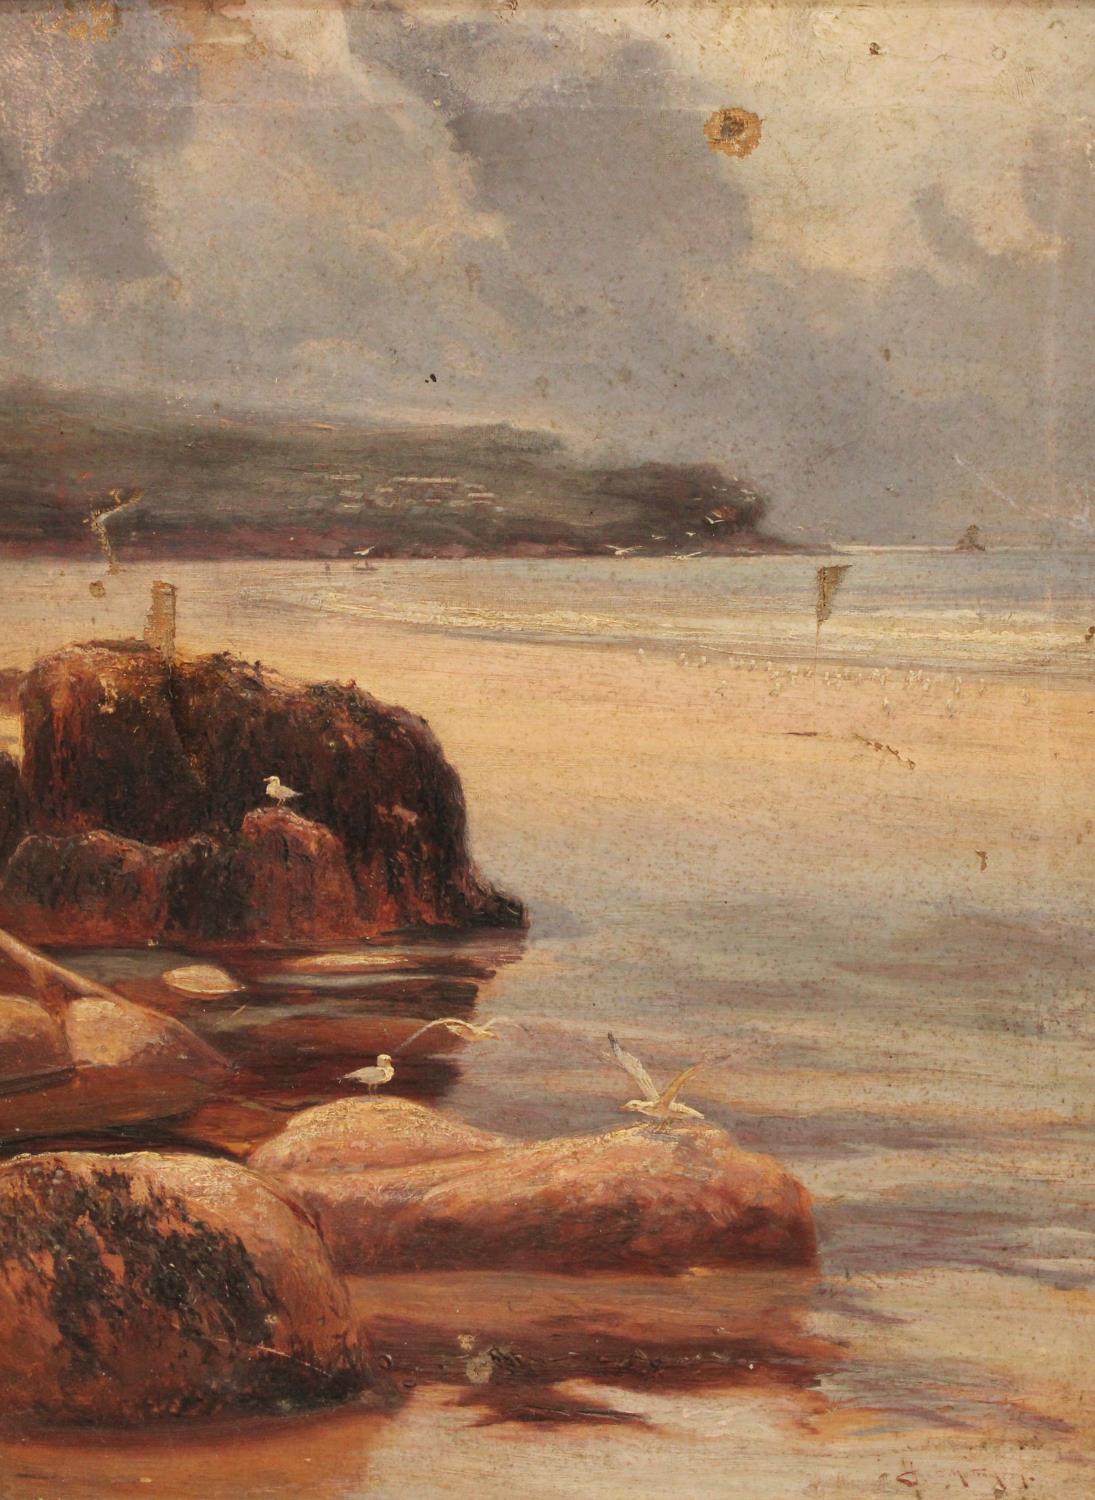 Charles Sim Mottram (1876 - 1919) Seagulls on the Coast signed, oil on canvas, 44.5cm x 33.